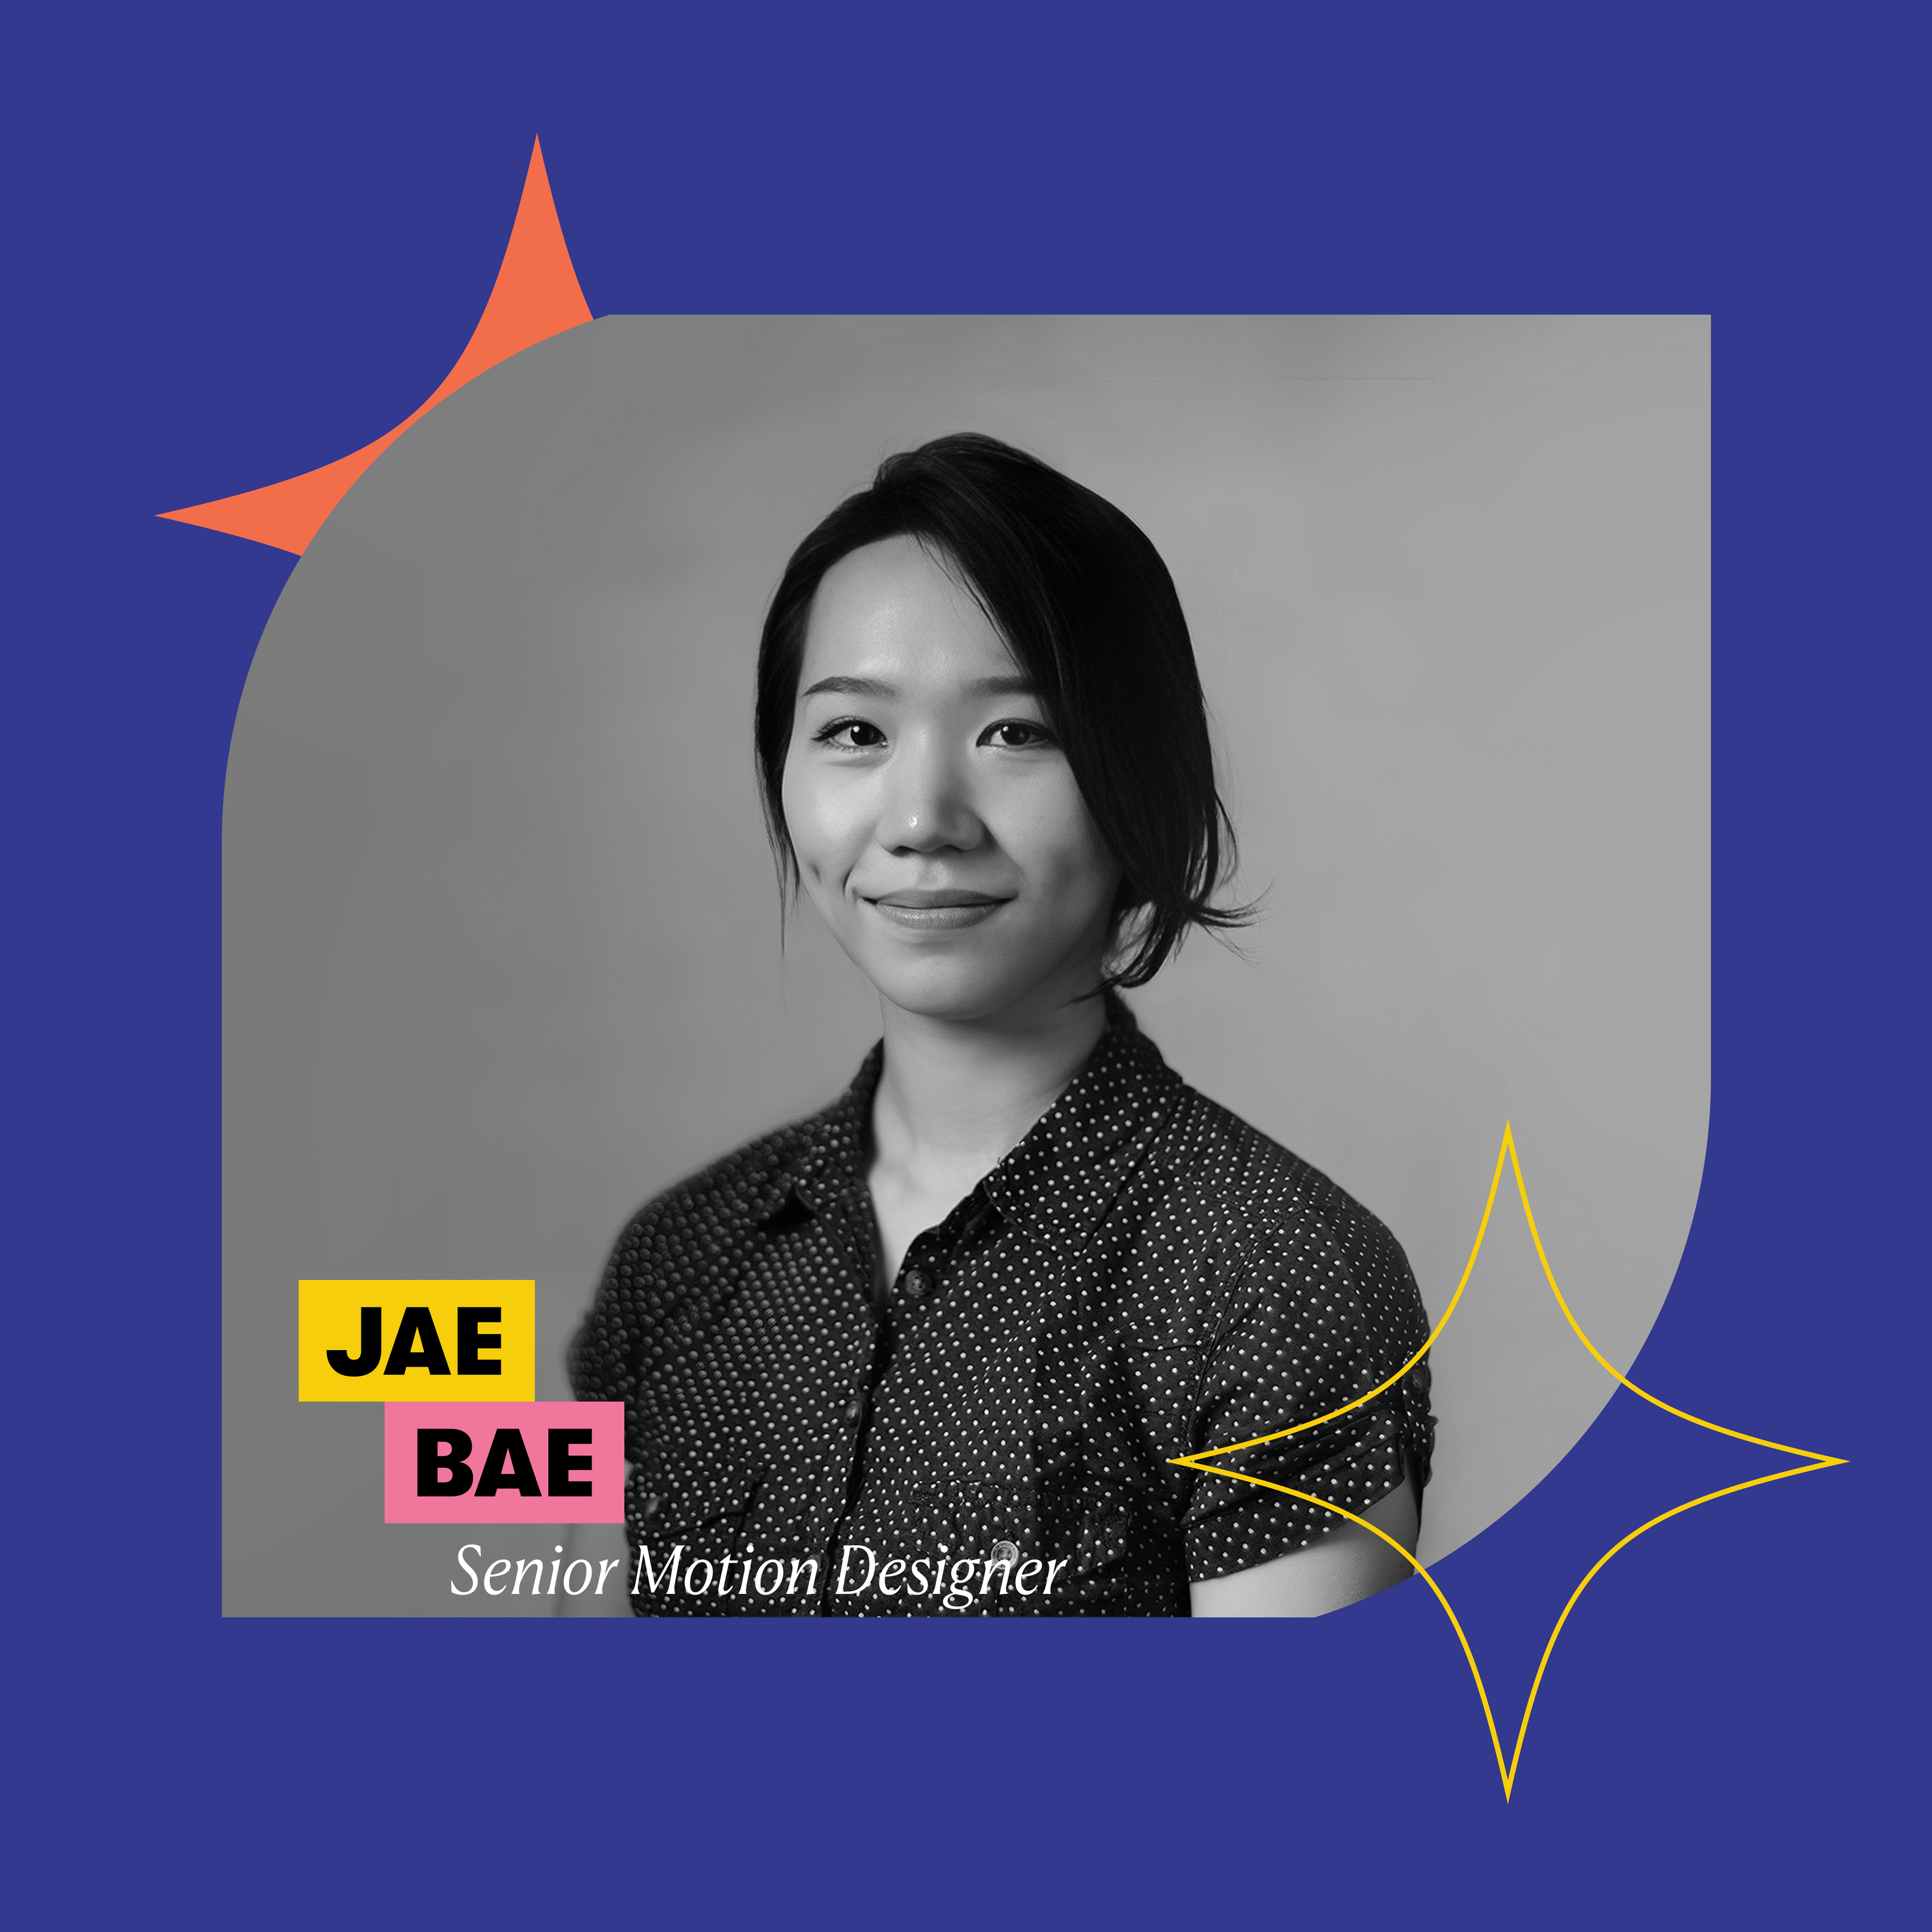 Eye of the Beholder | Jae Bae | Ideas in Motion 